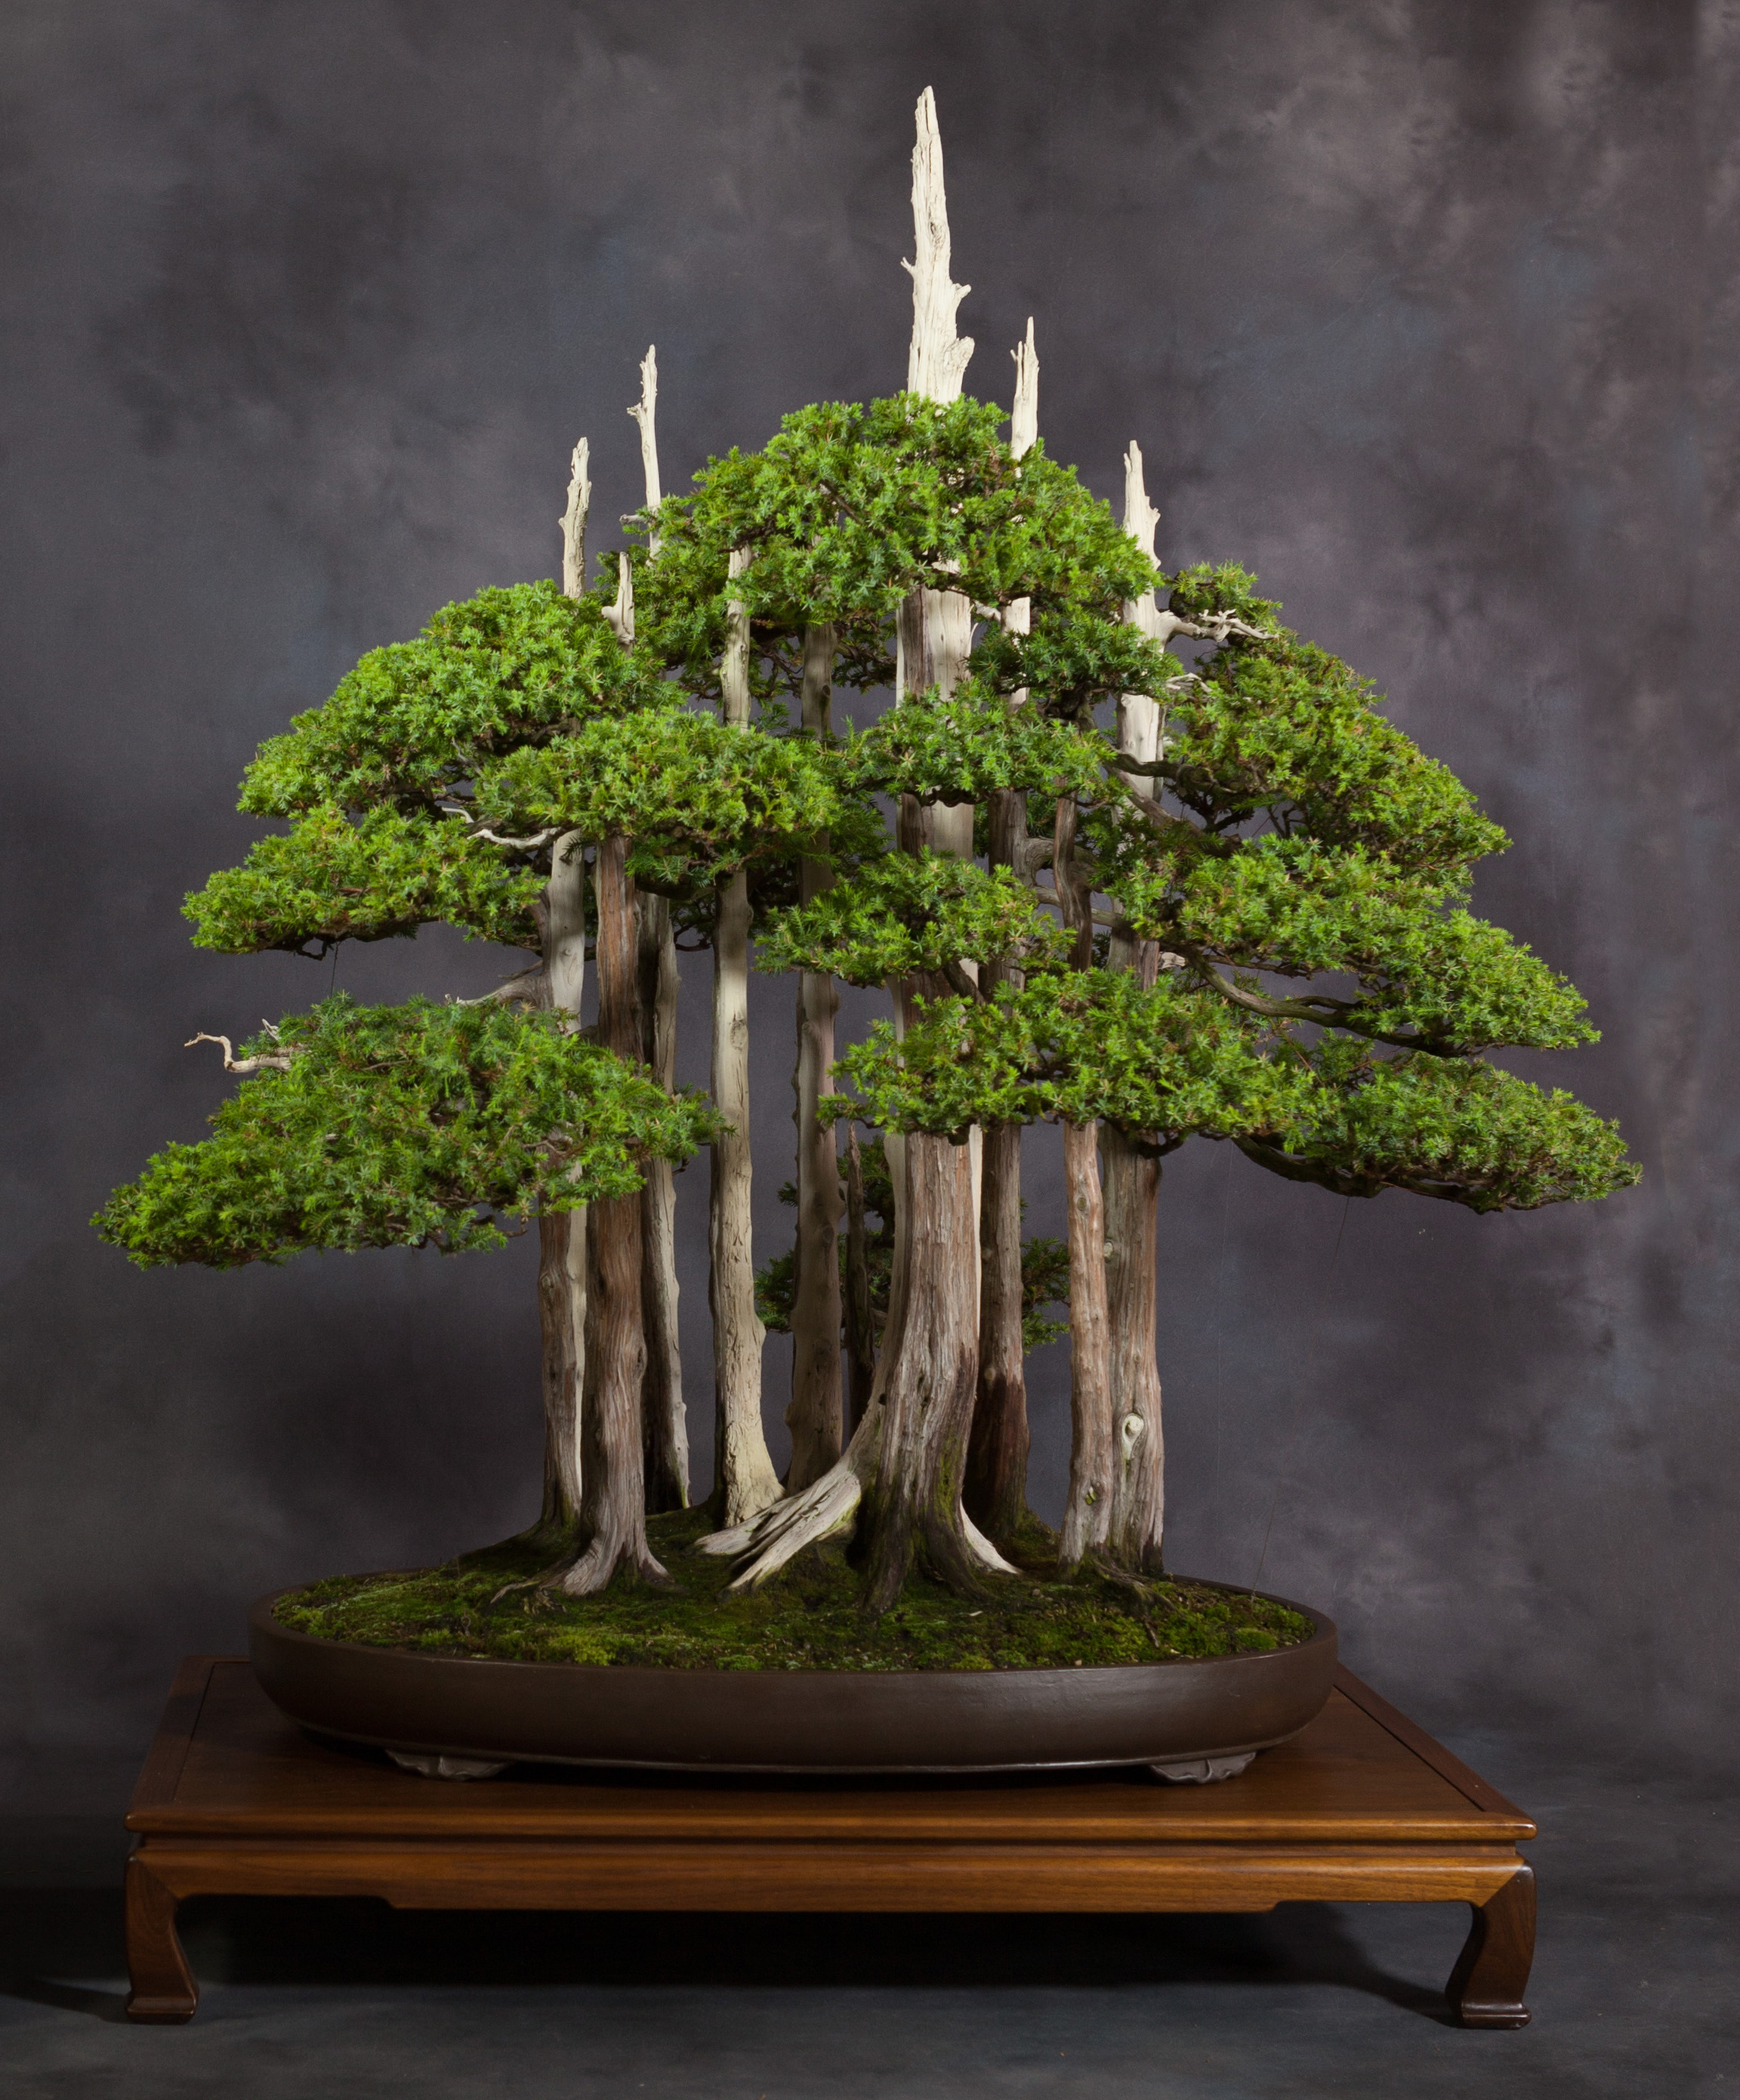 example #2 of bonsai